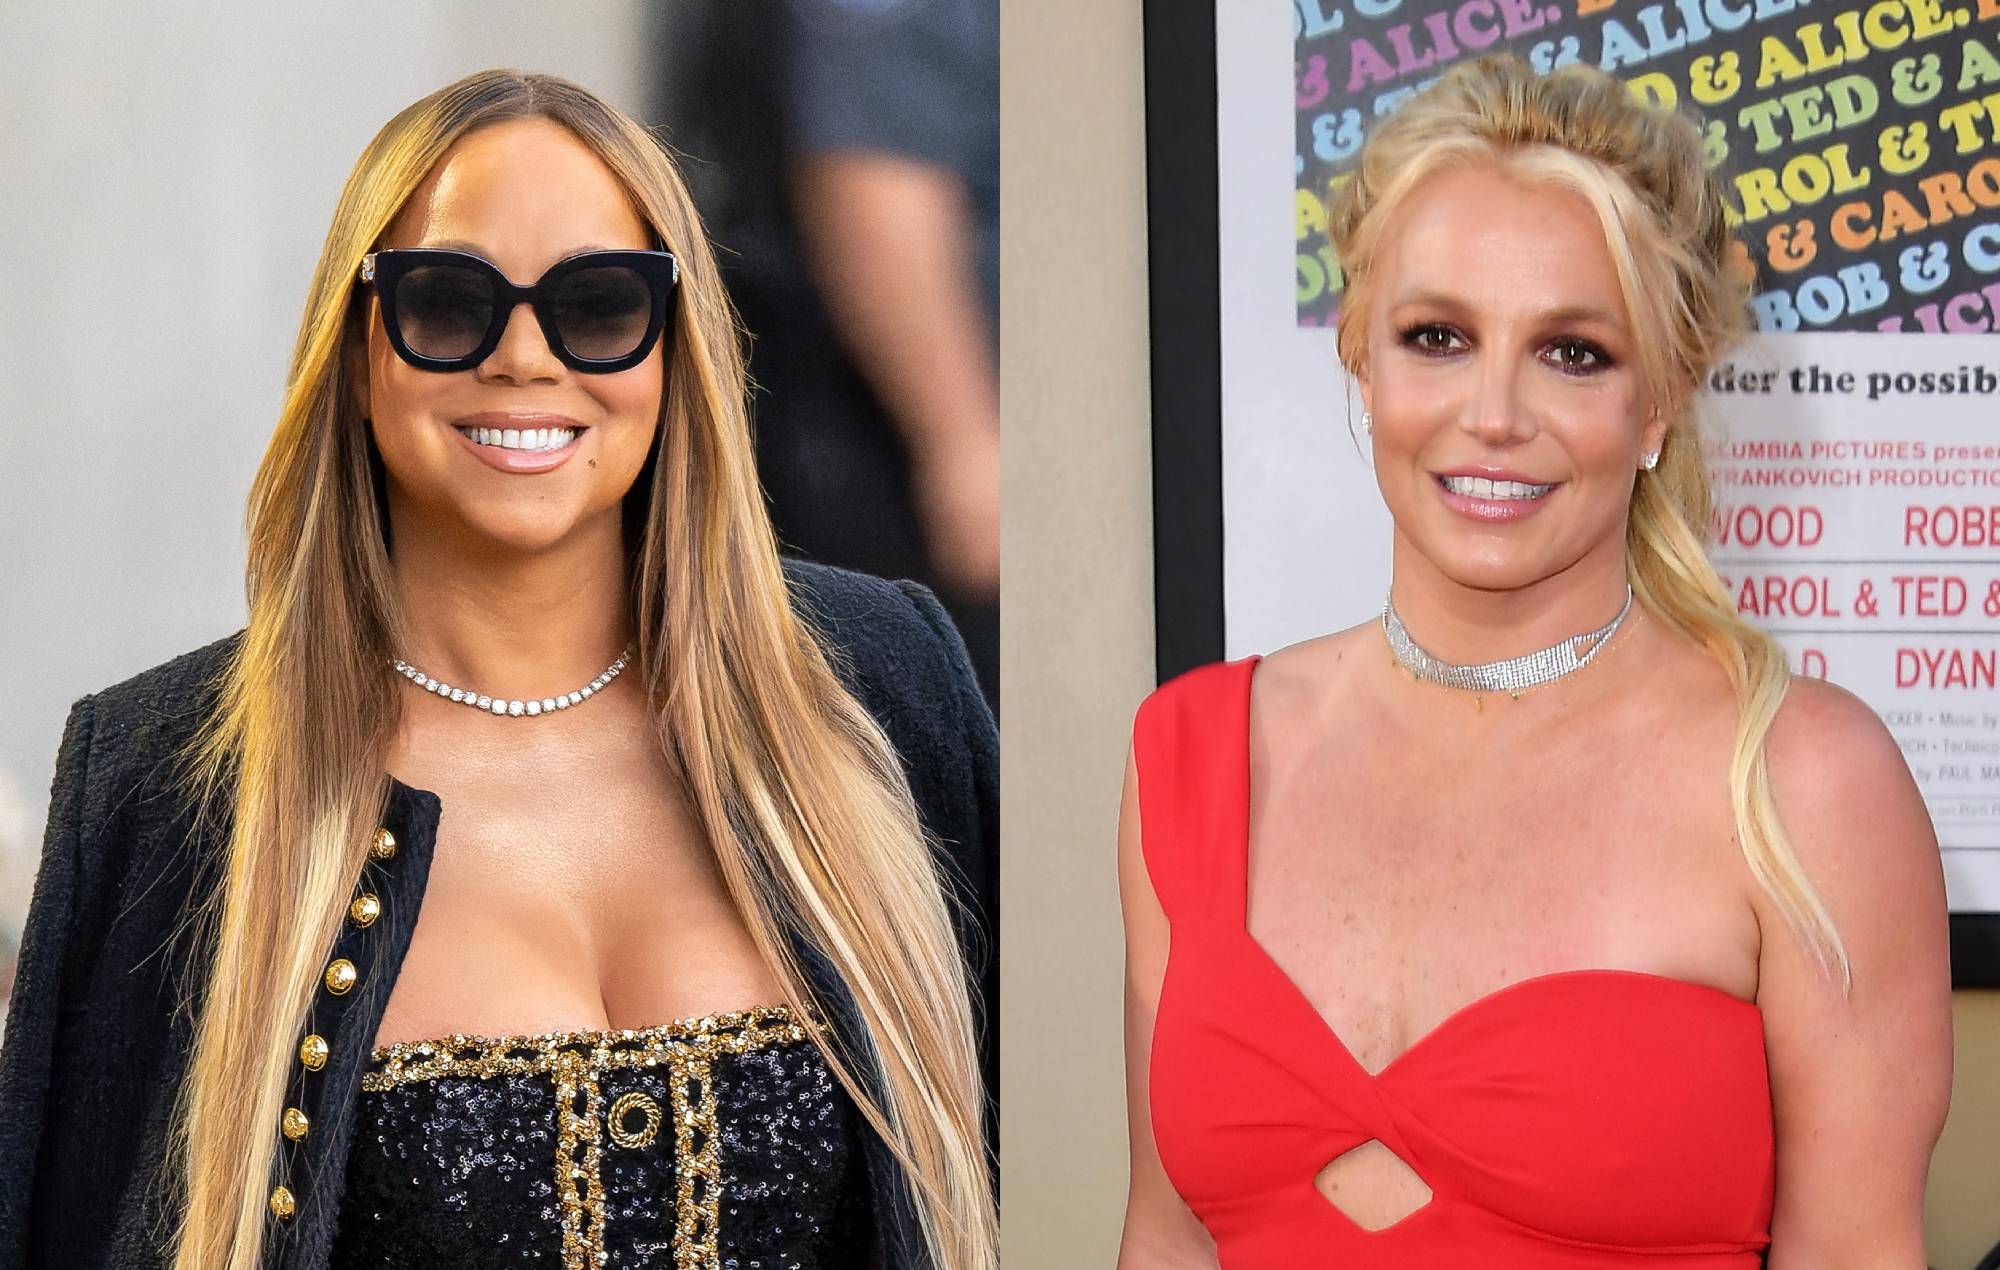 Mariah Carey responds to “super sweet” mention in Britney Spears’ memoir